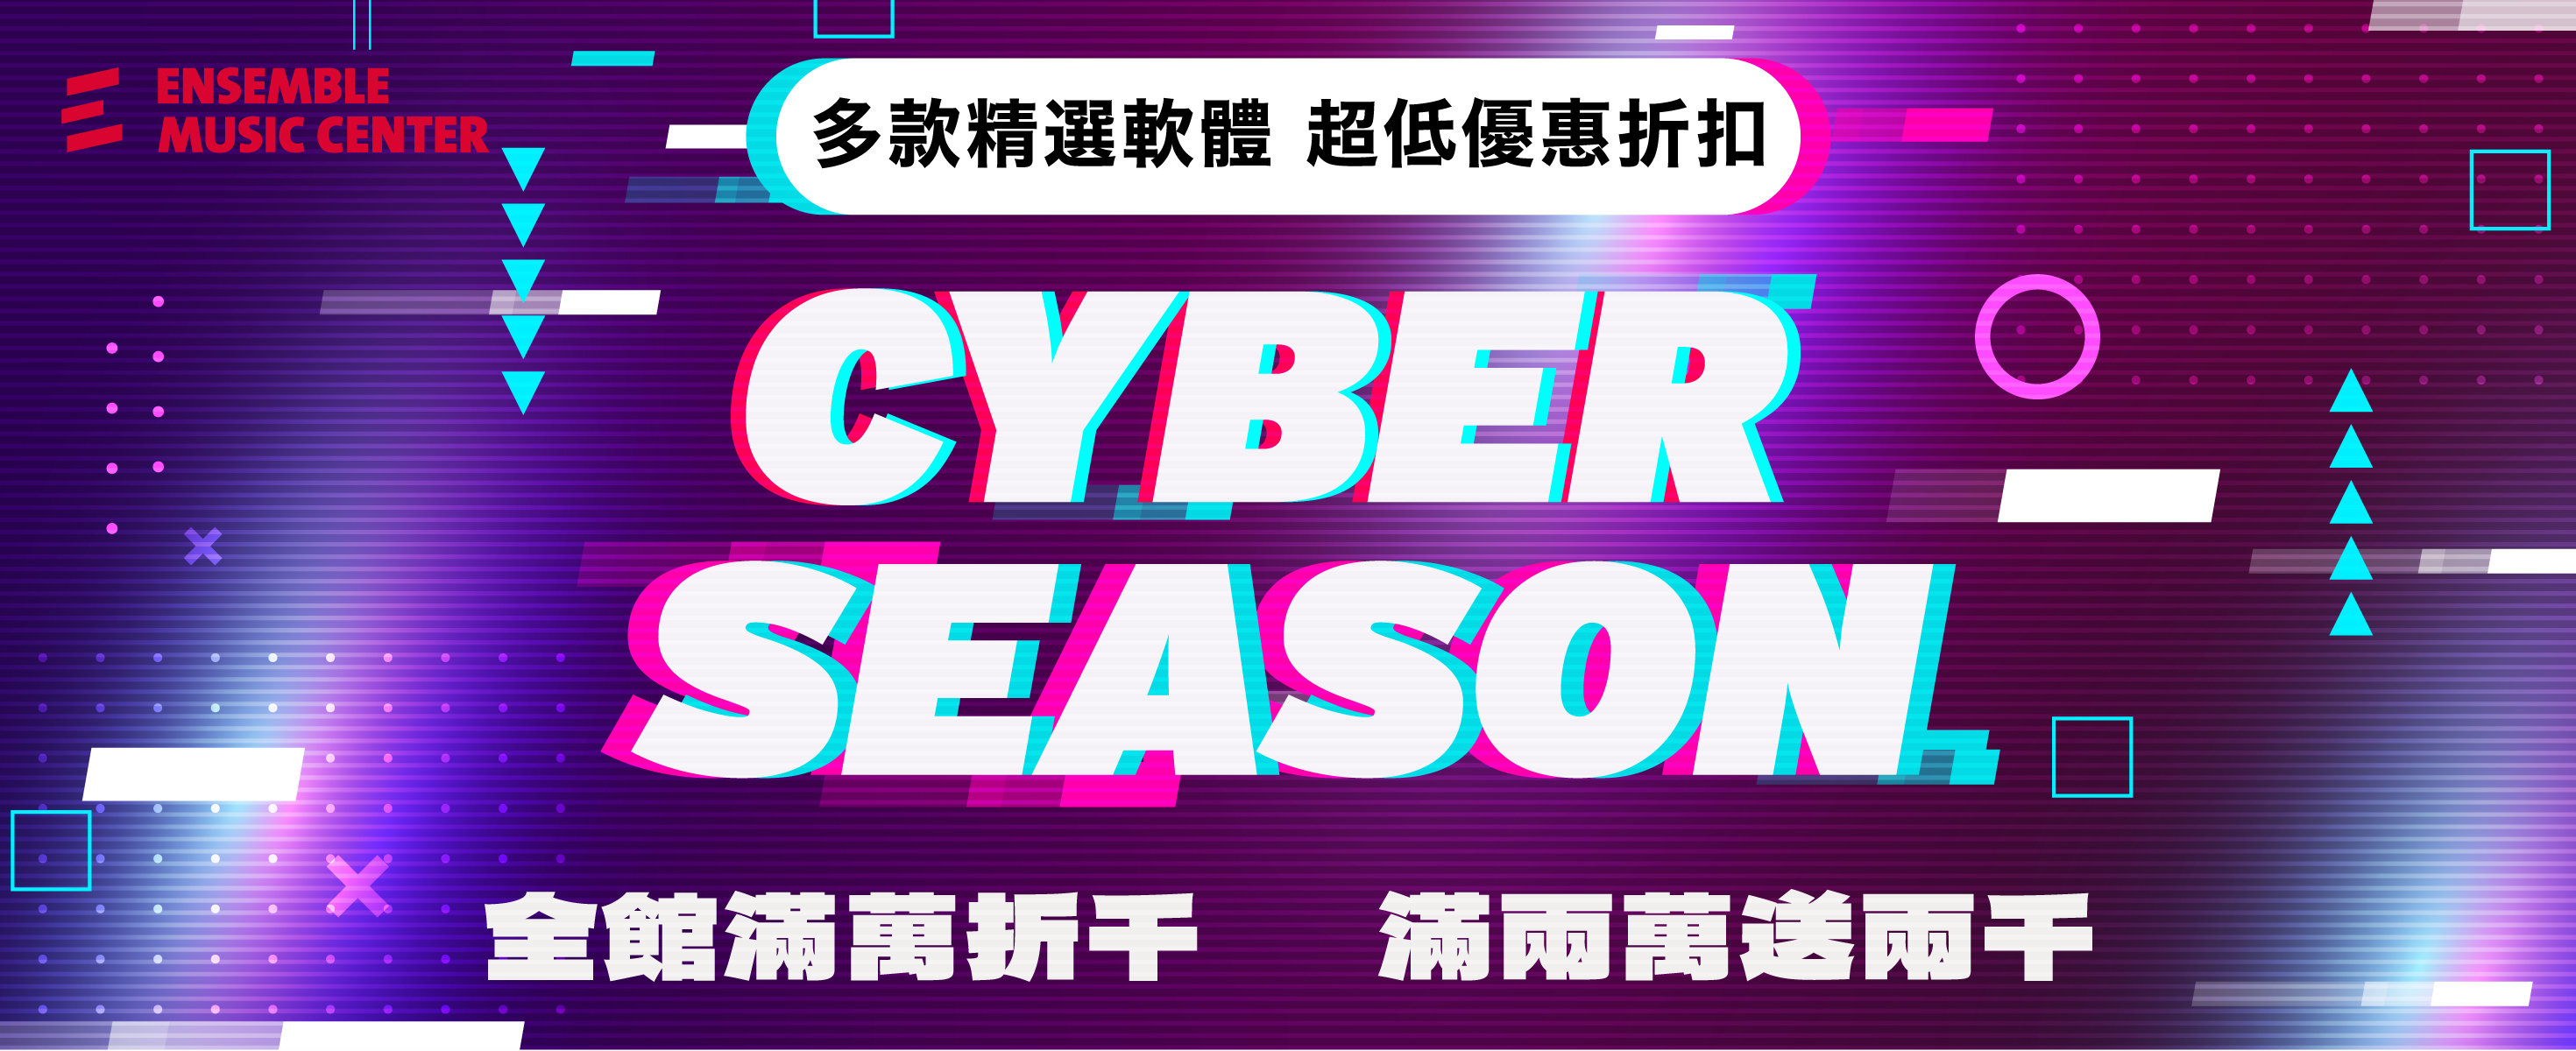 Cyber Season 瘋狂價優惠